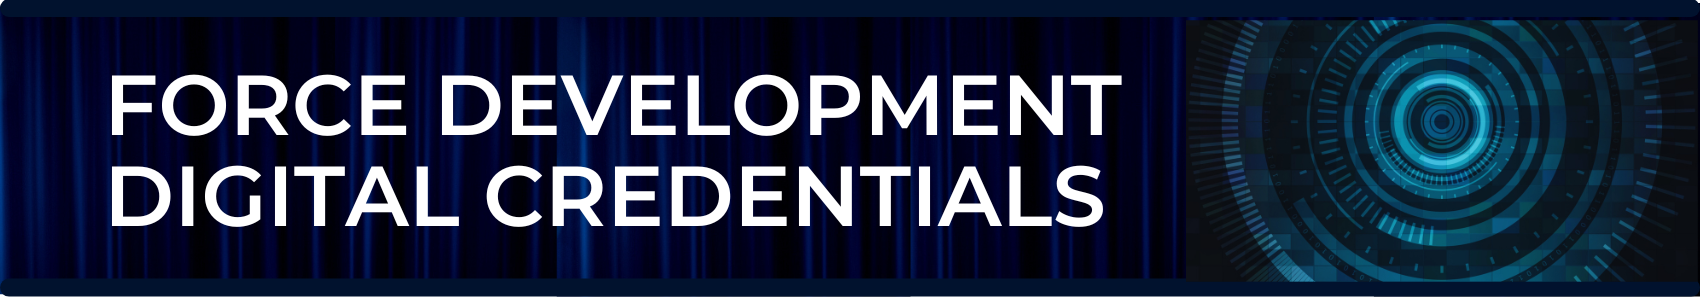 Force Development Digital Credentials Page Banner